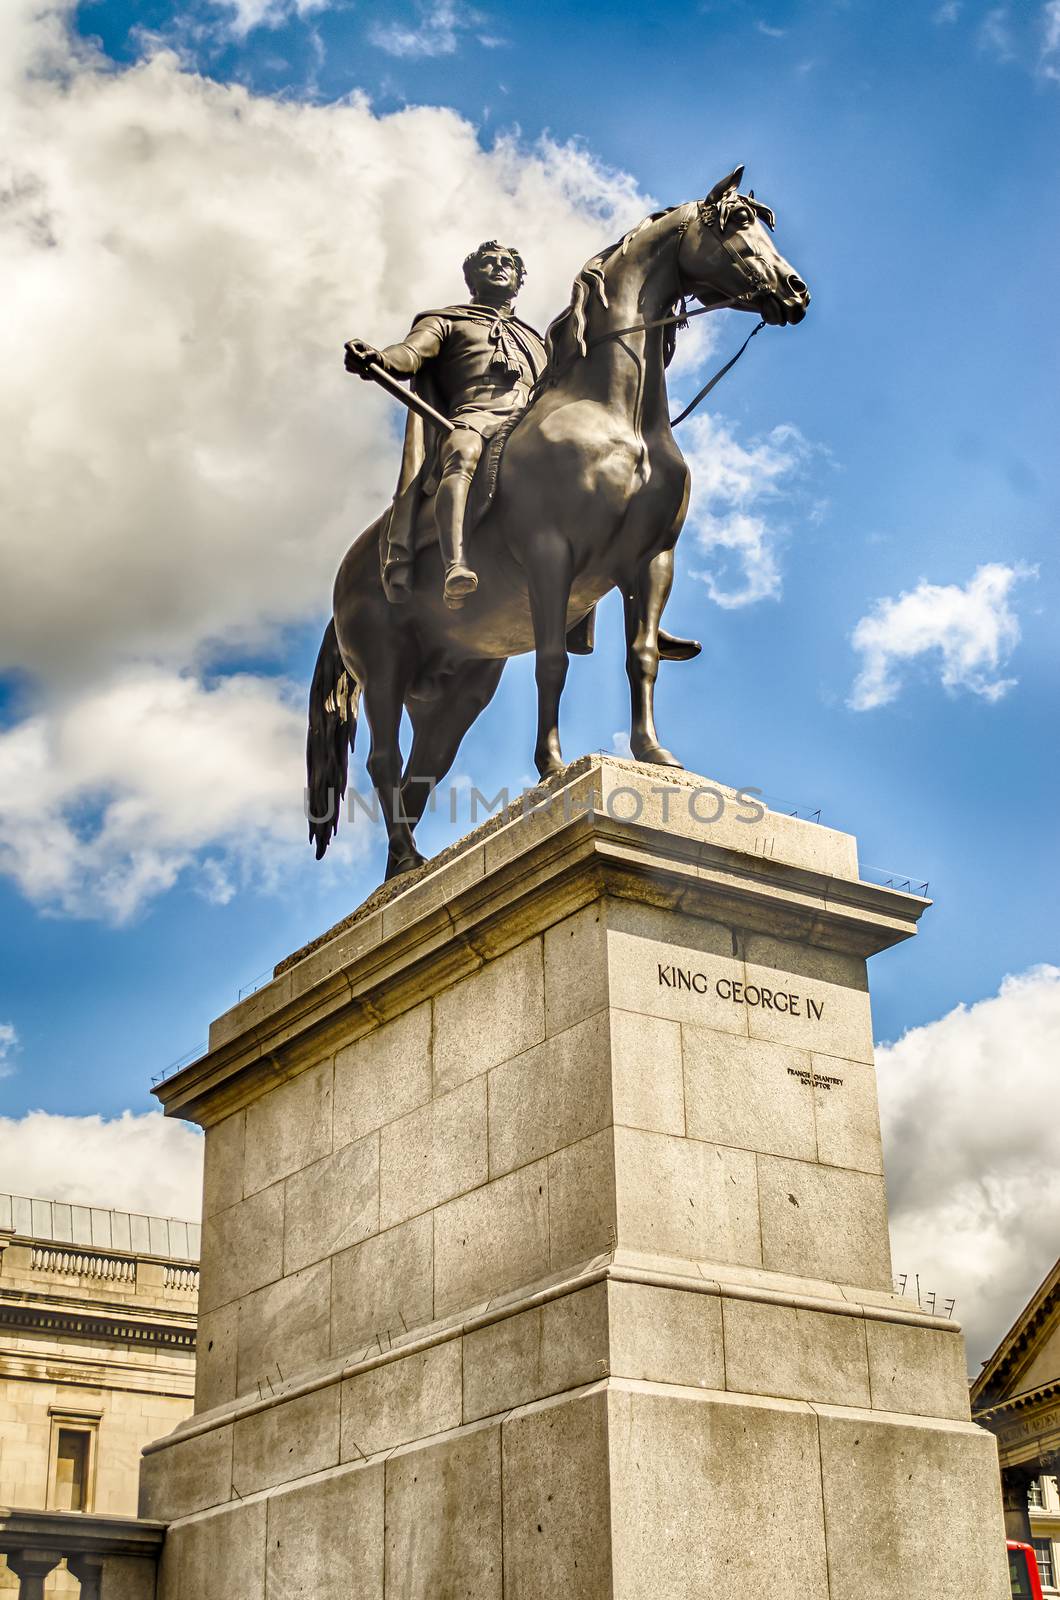 King George IV Monument in Trafalgar Square, London, UK